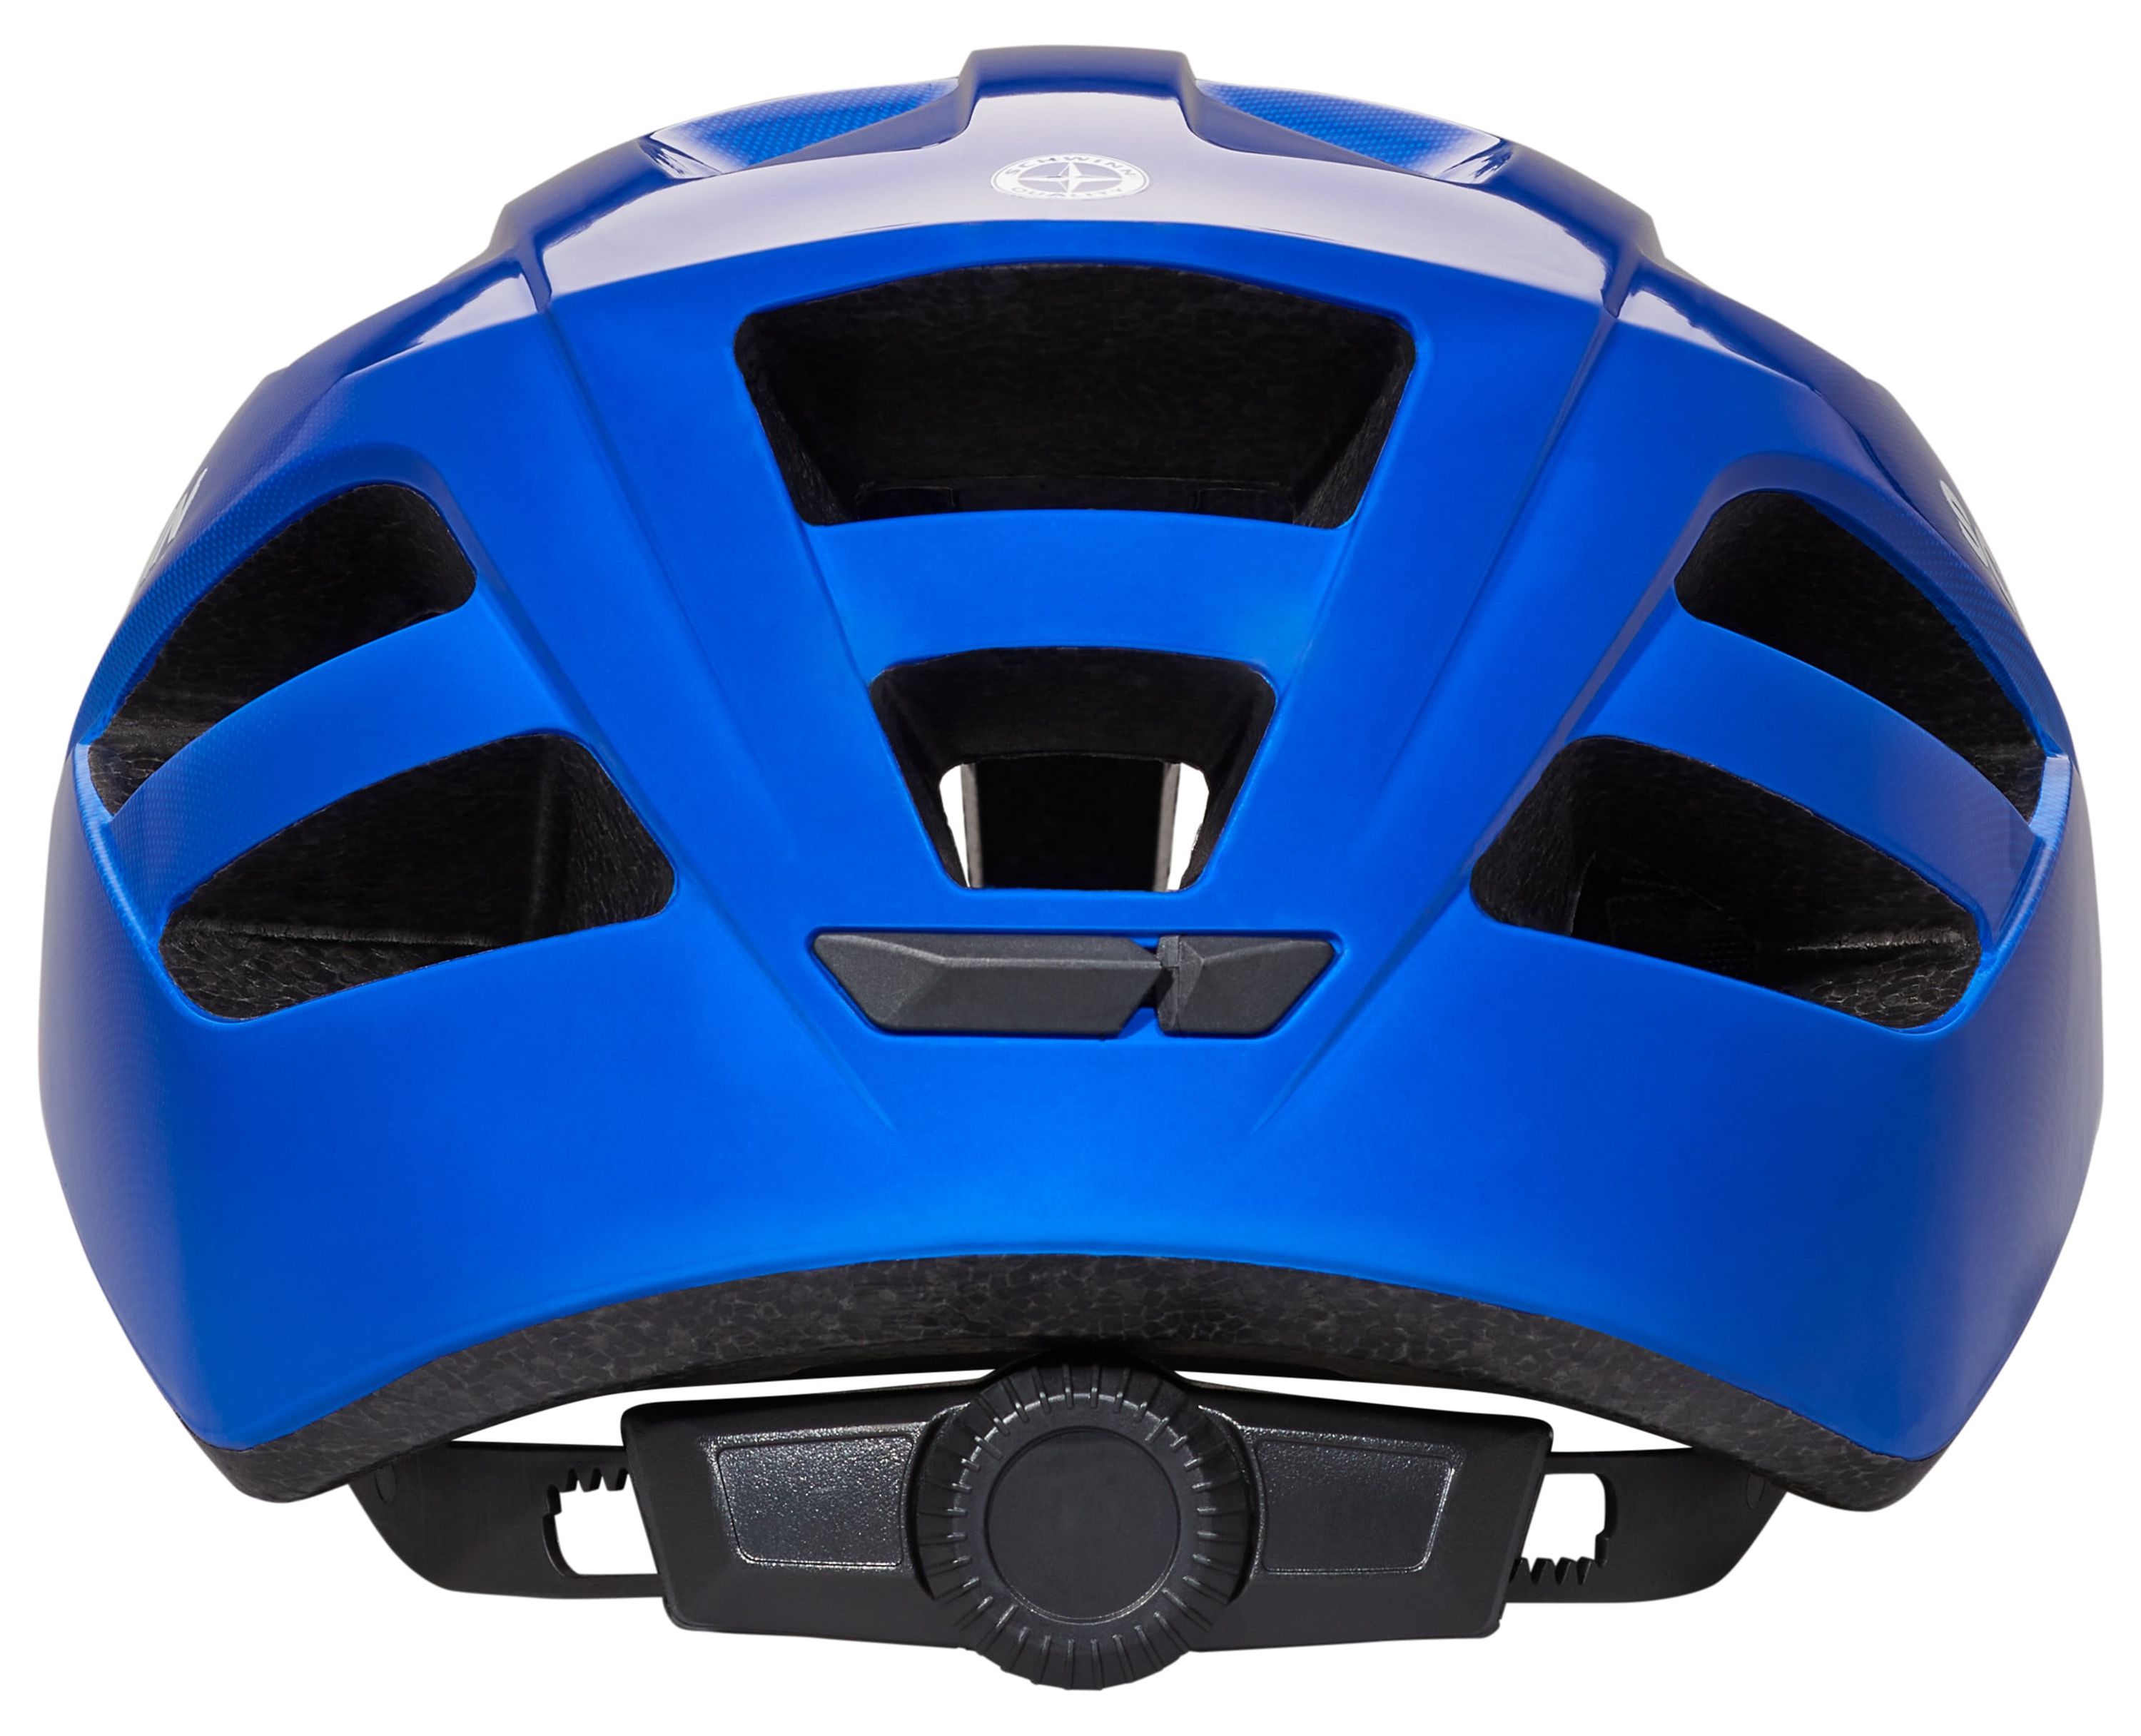 Schwinn Outlook Adult Helmet, Ages 14+, Blue - image 5 of 6